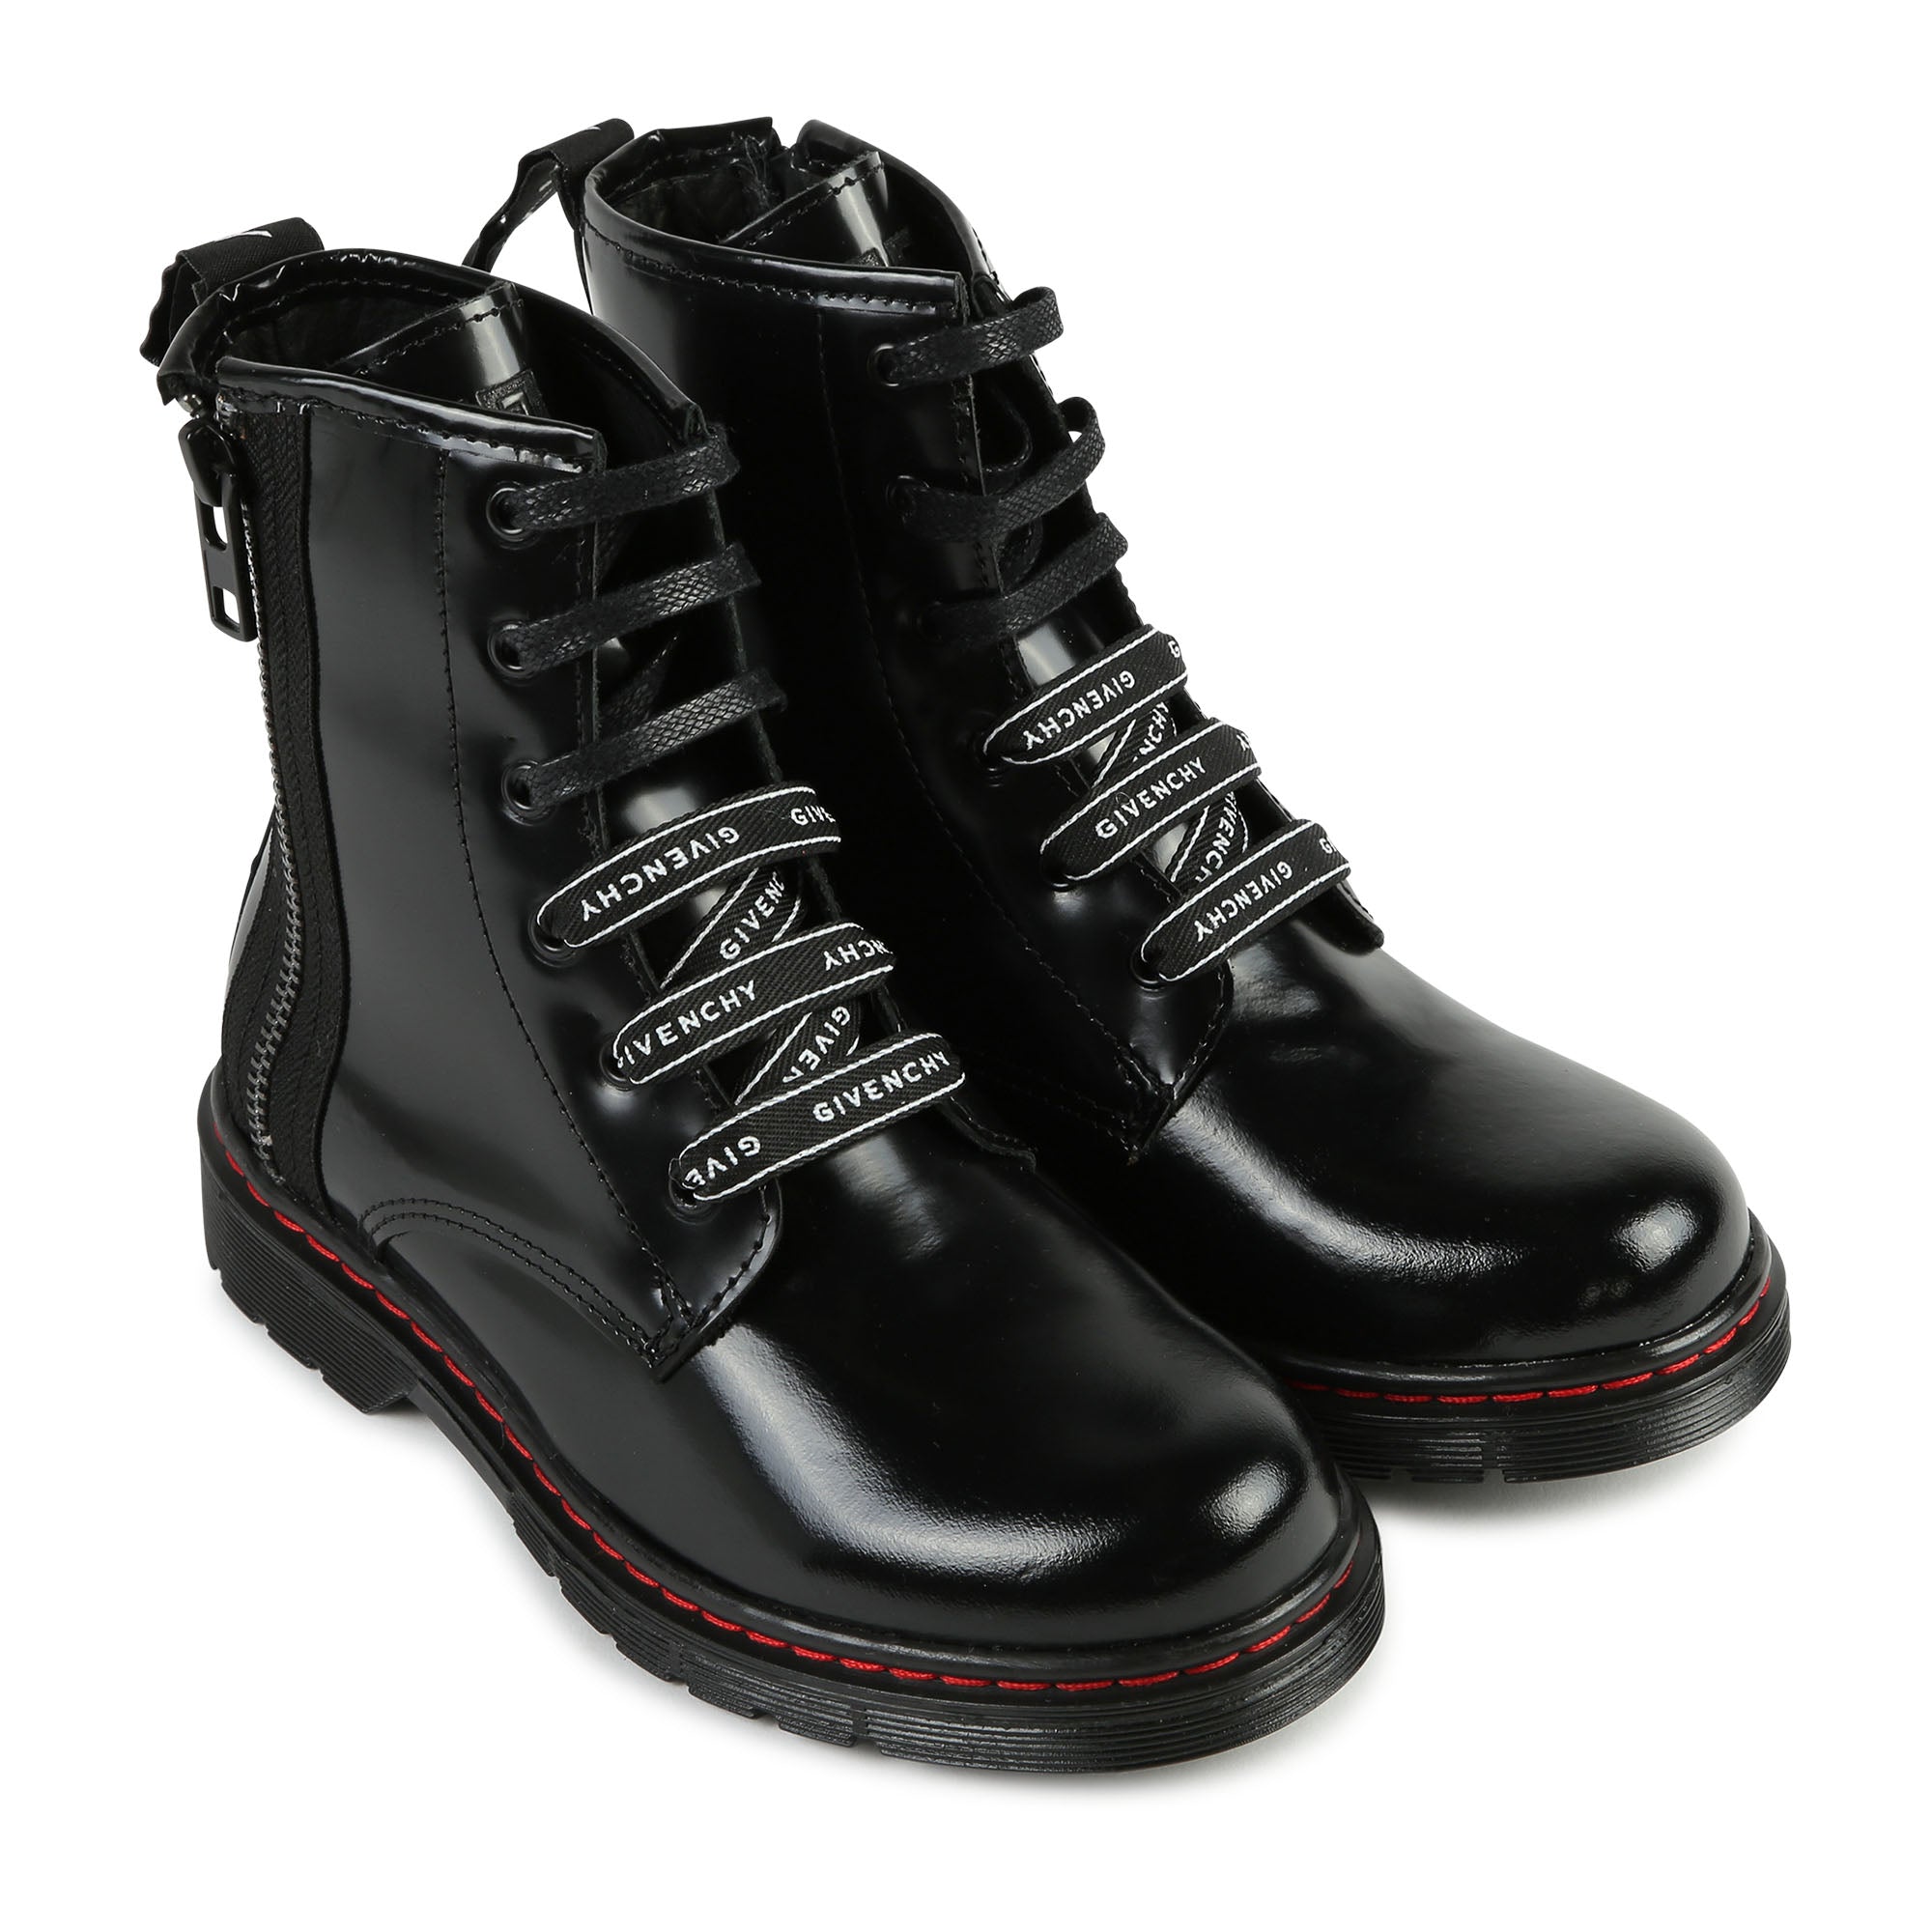 Boys Black Leather Shoes